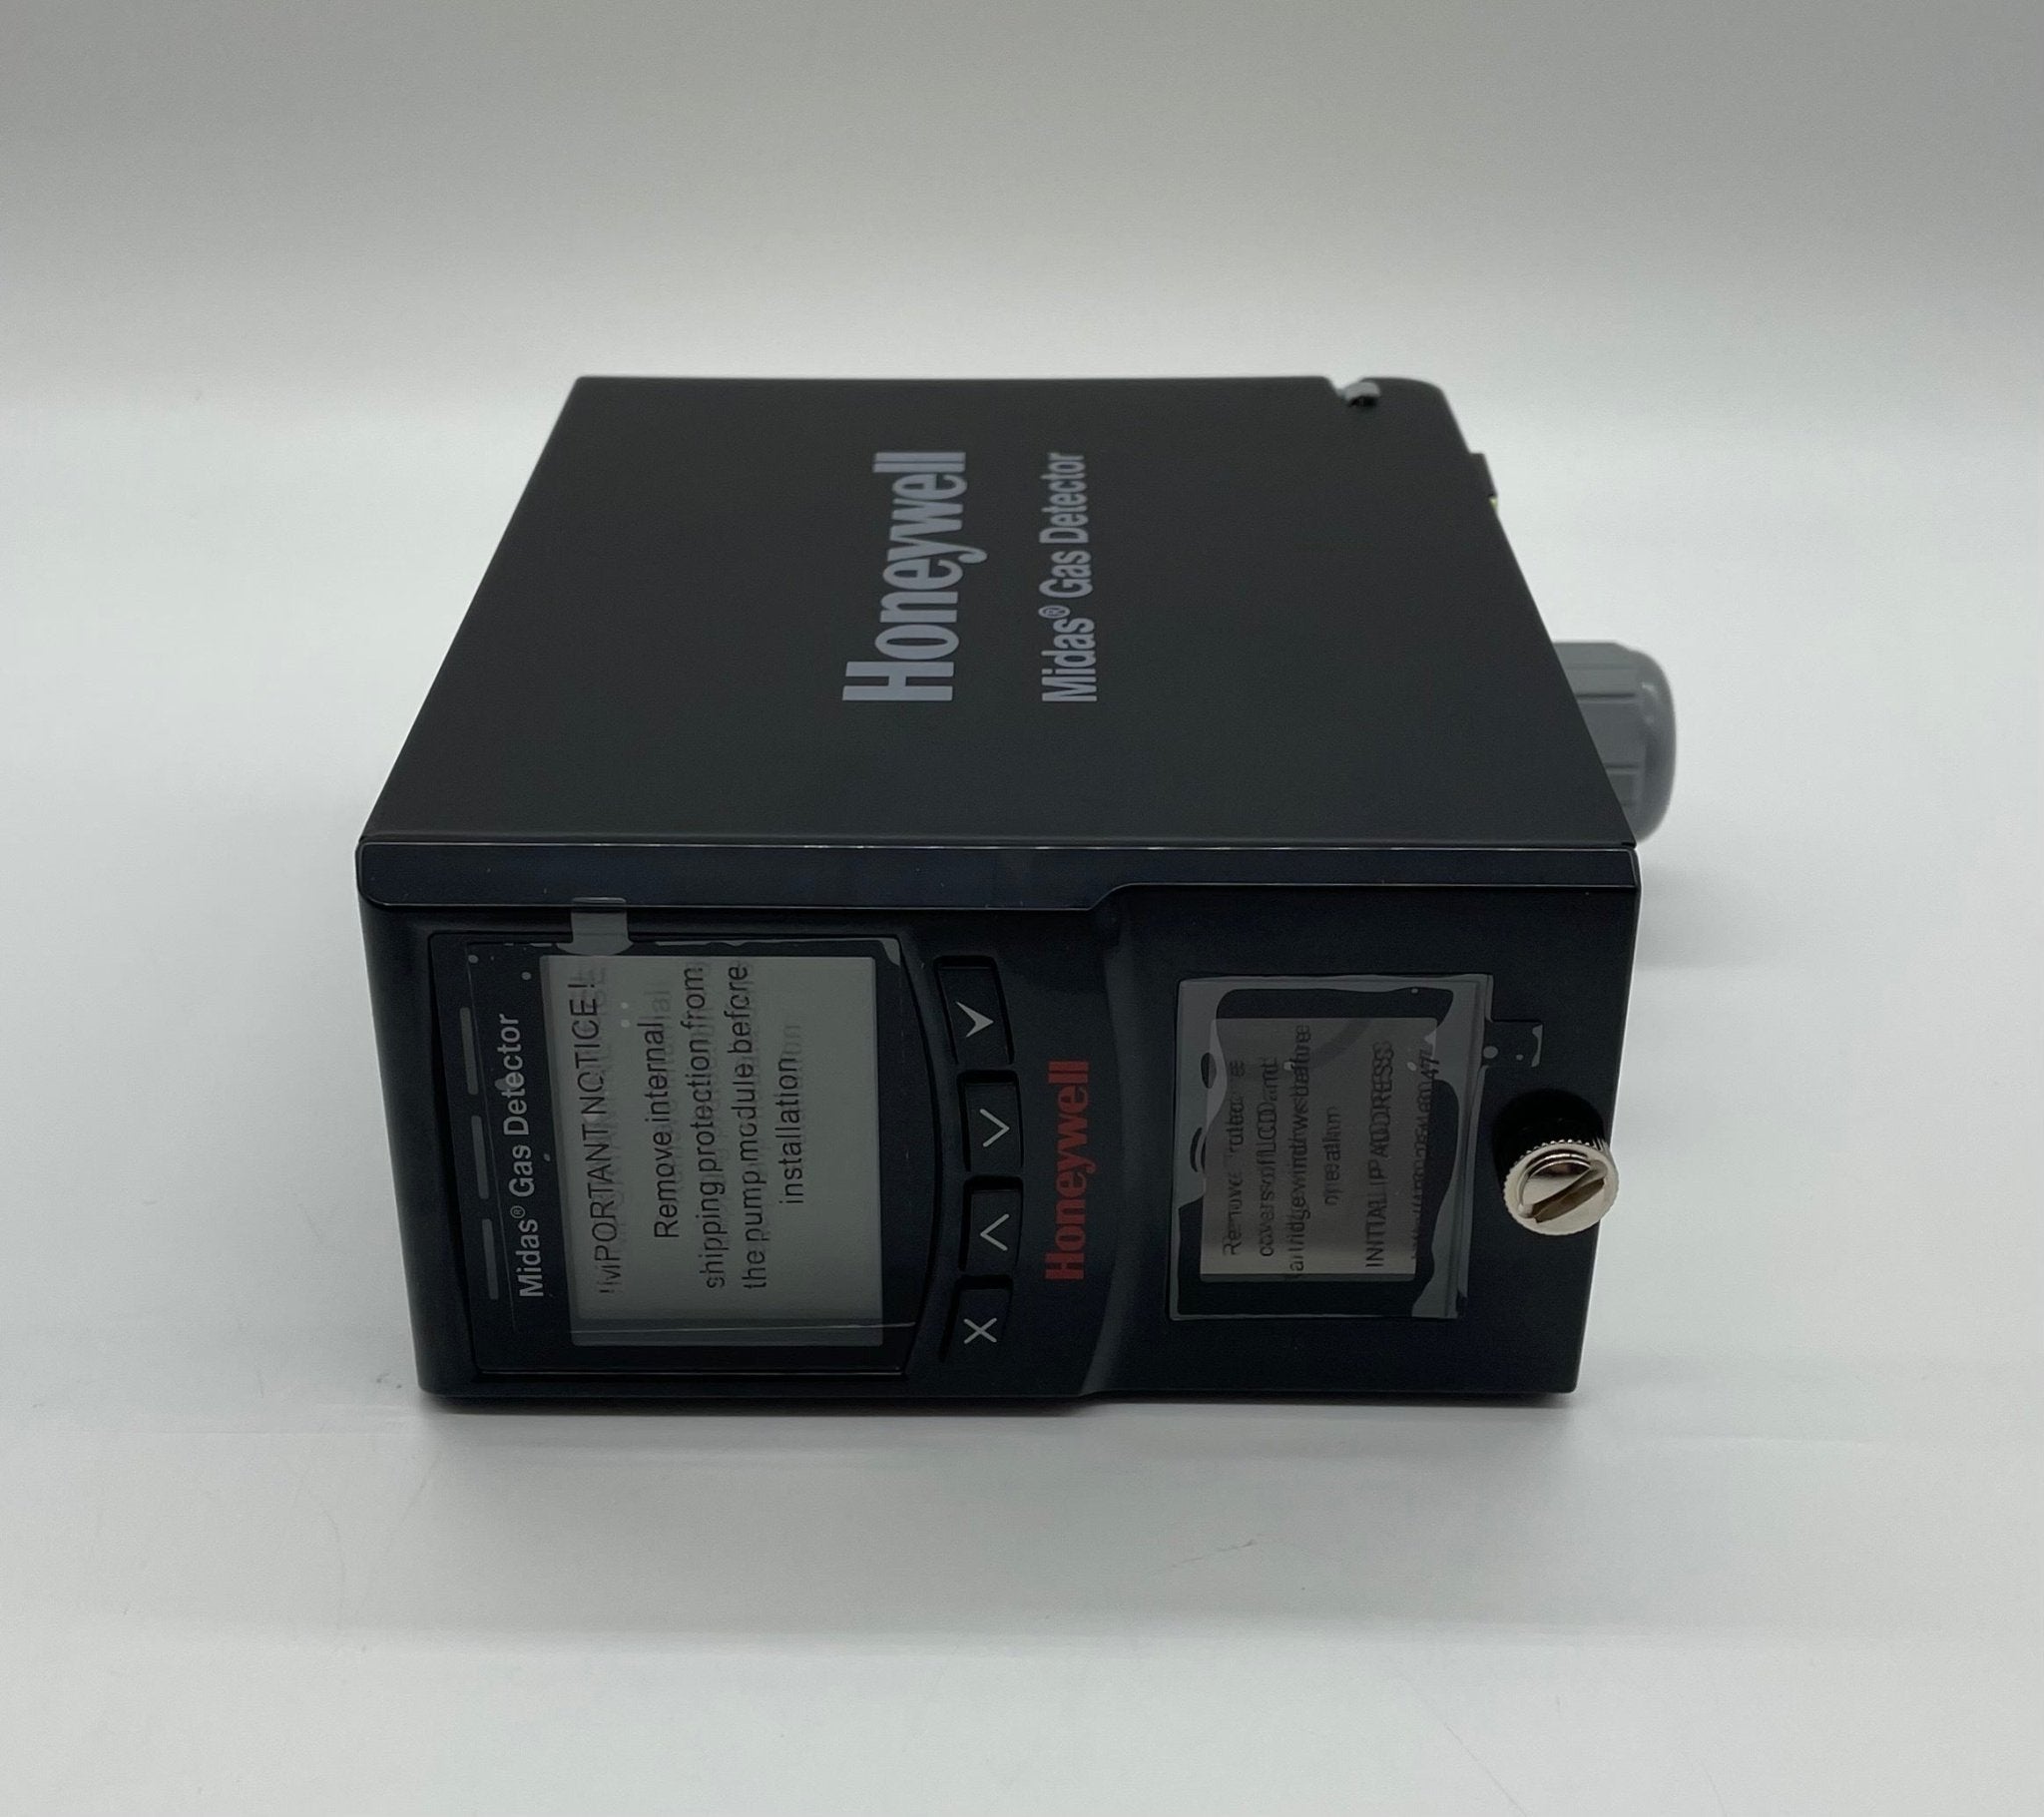 Honeywell MIDAS-T-004 - The Fire Alarm Supplier